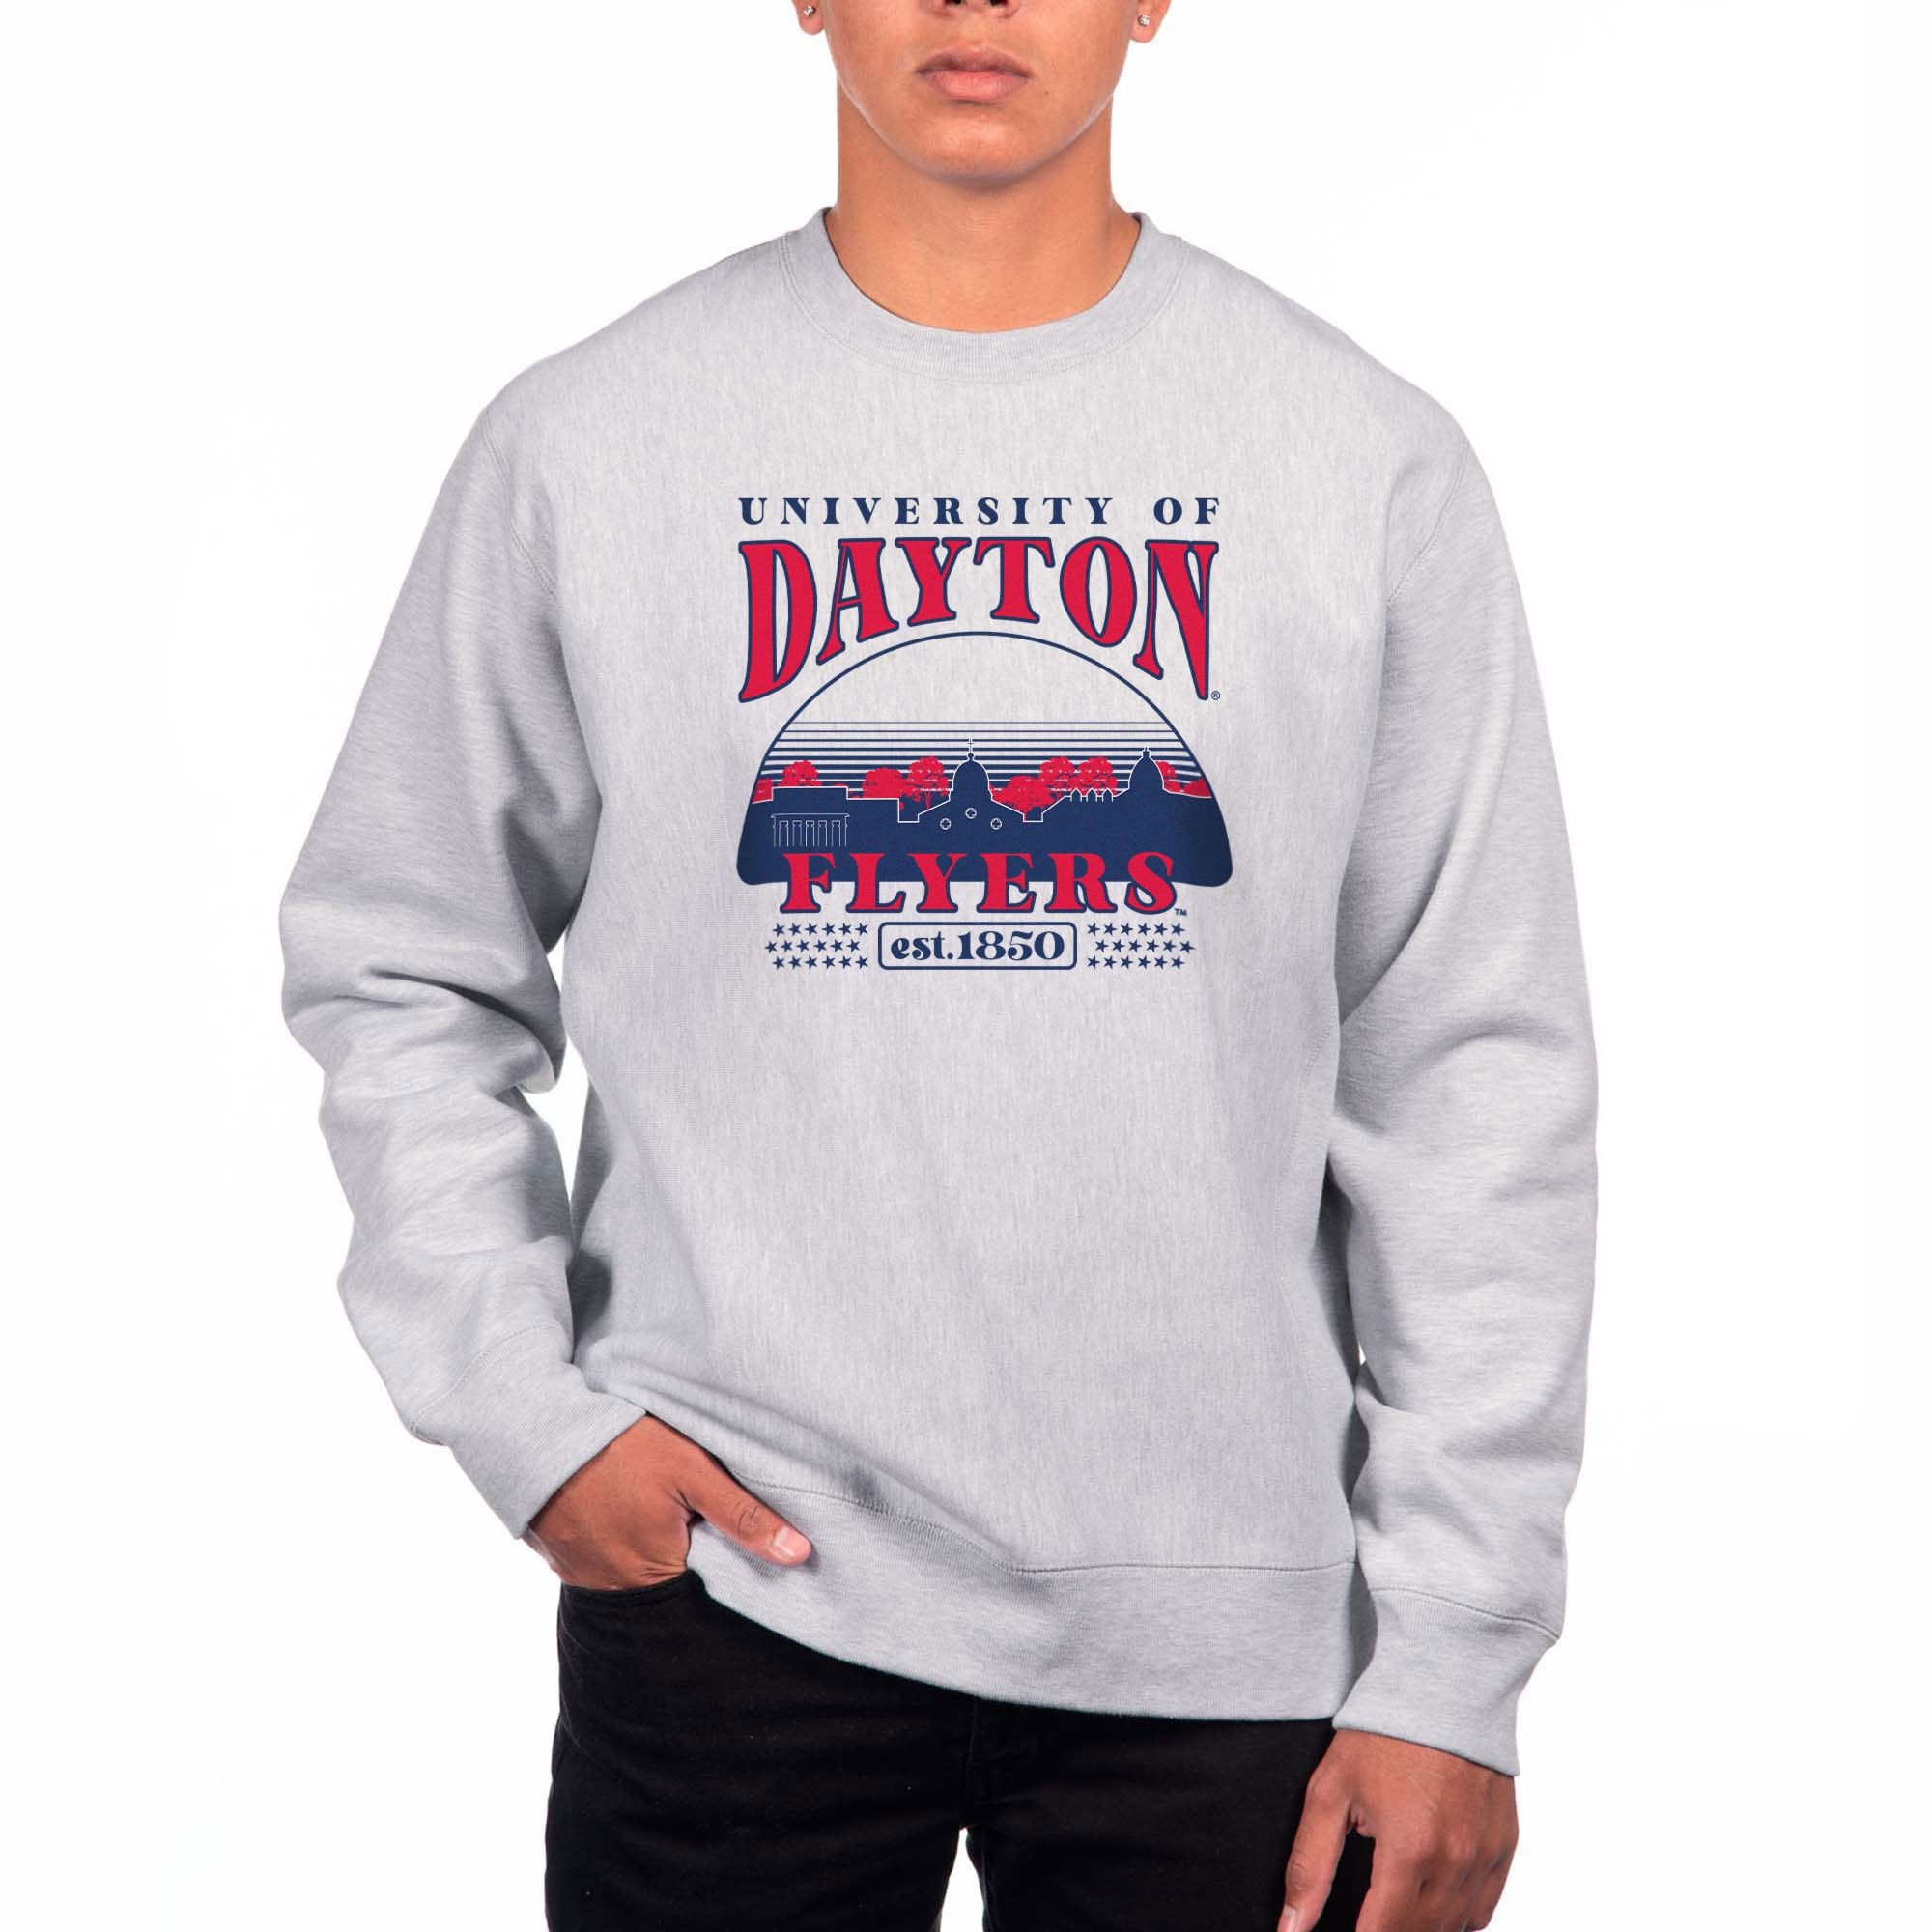 Dayton Flyers Uscape Apparel Premium Heavyweight Crewneck Sweatshirt - Heather Gray | Fanatics